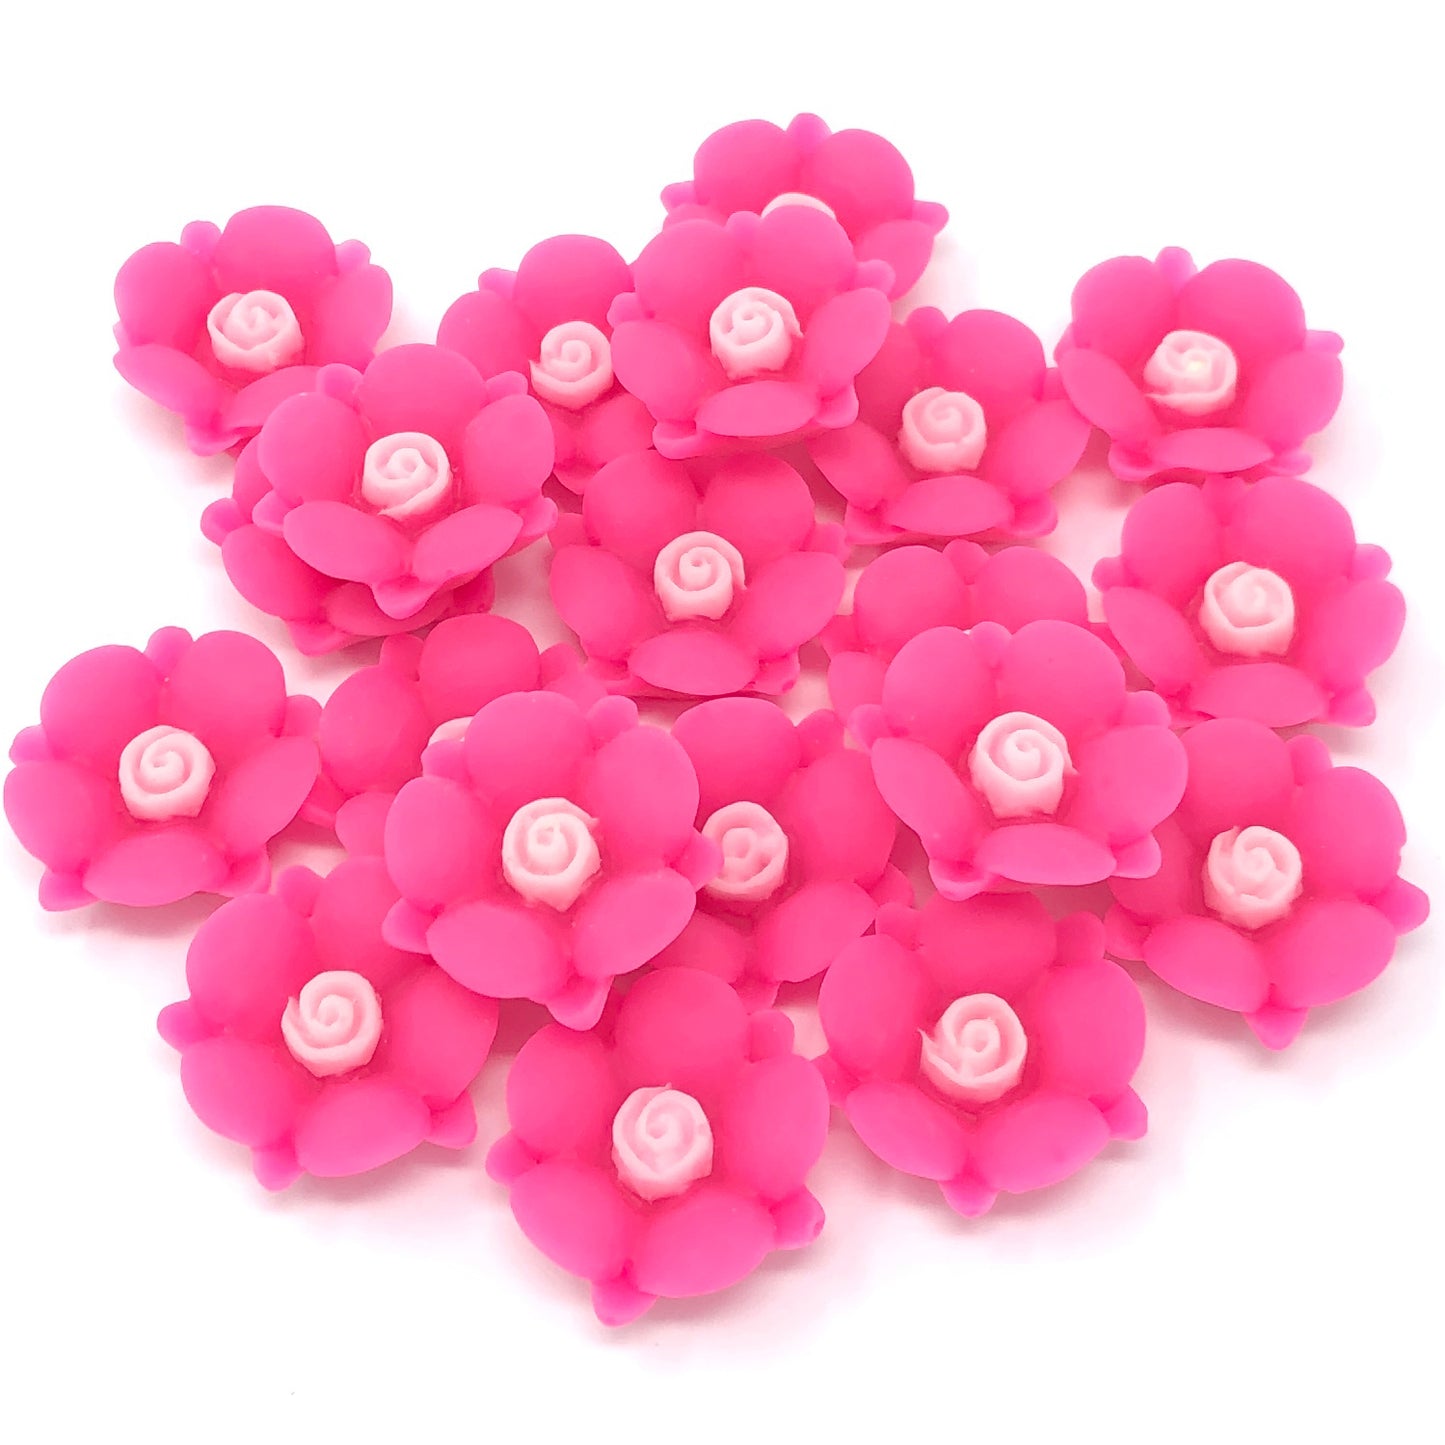 Pink 20mm Soft Feel Rose Flower Flatbacks - Pack of 20